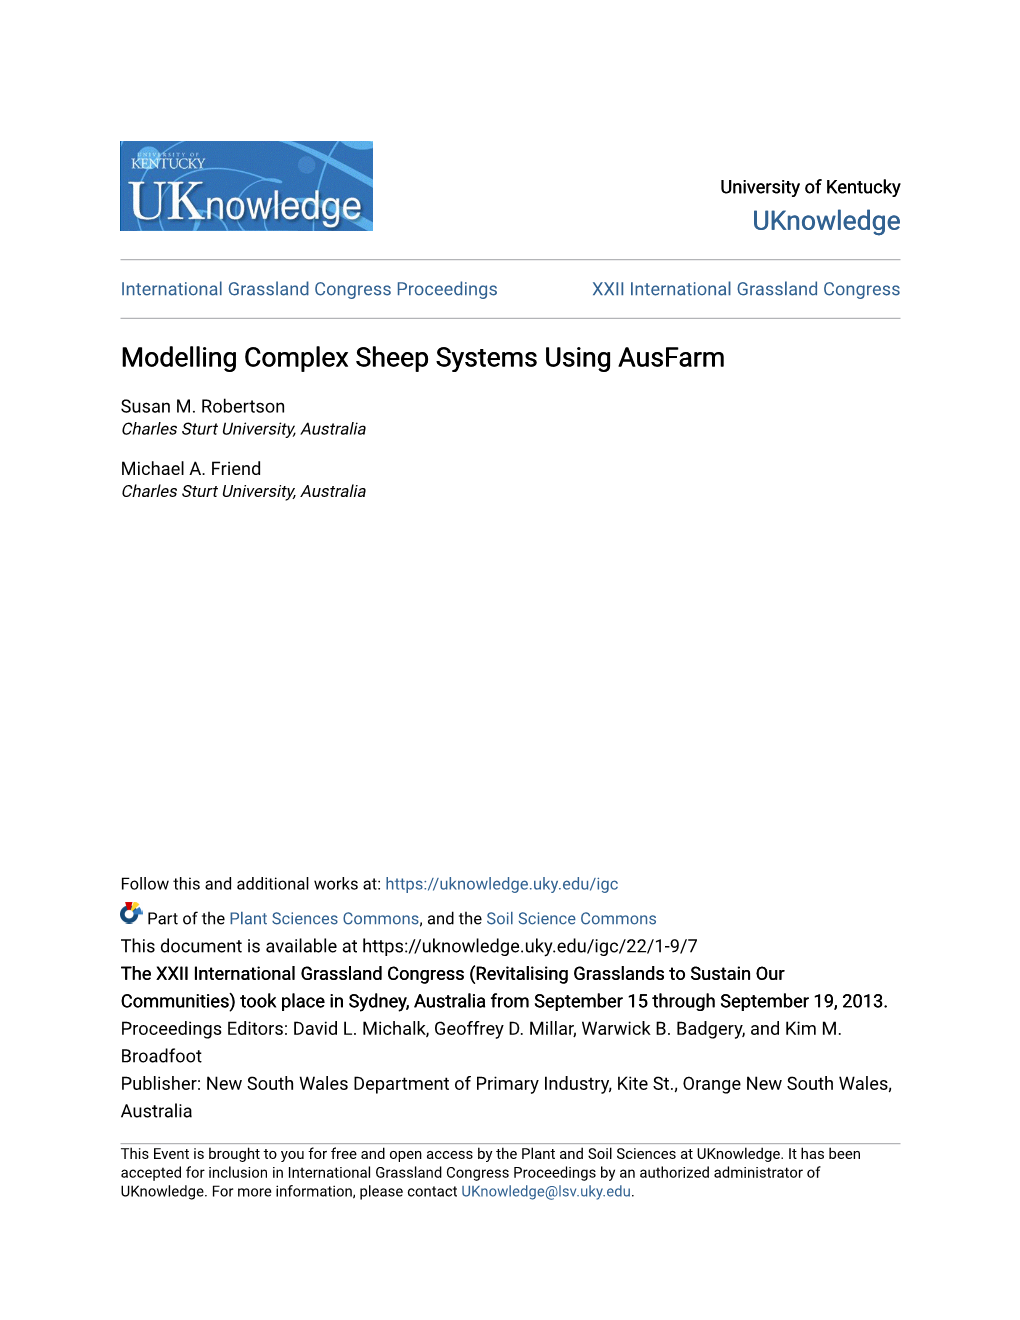 Modelling Complex Sheep Systems Using Ausfarm